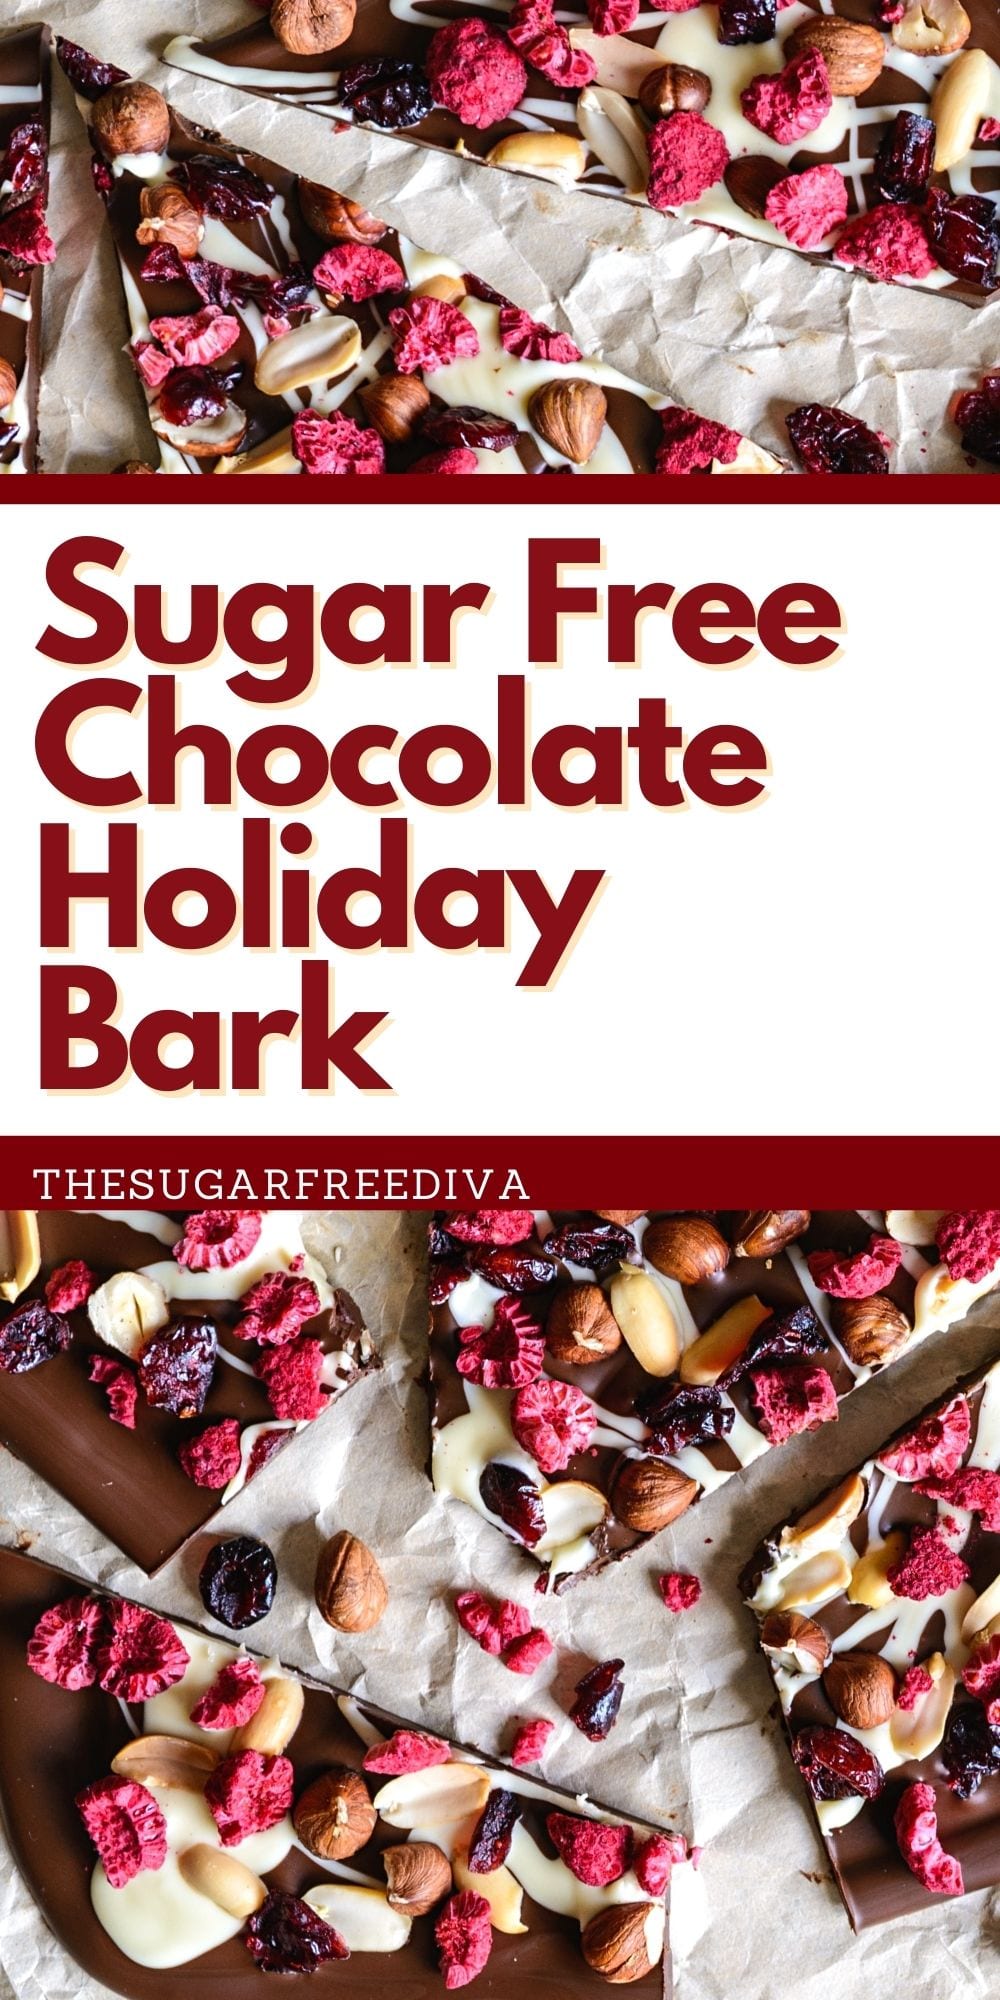 Sugar Free Chocolate Holiday Bark